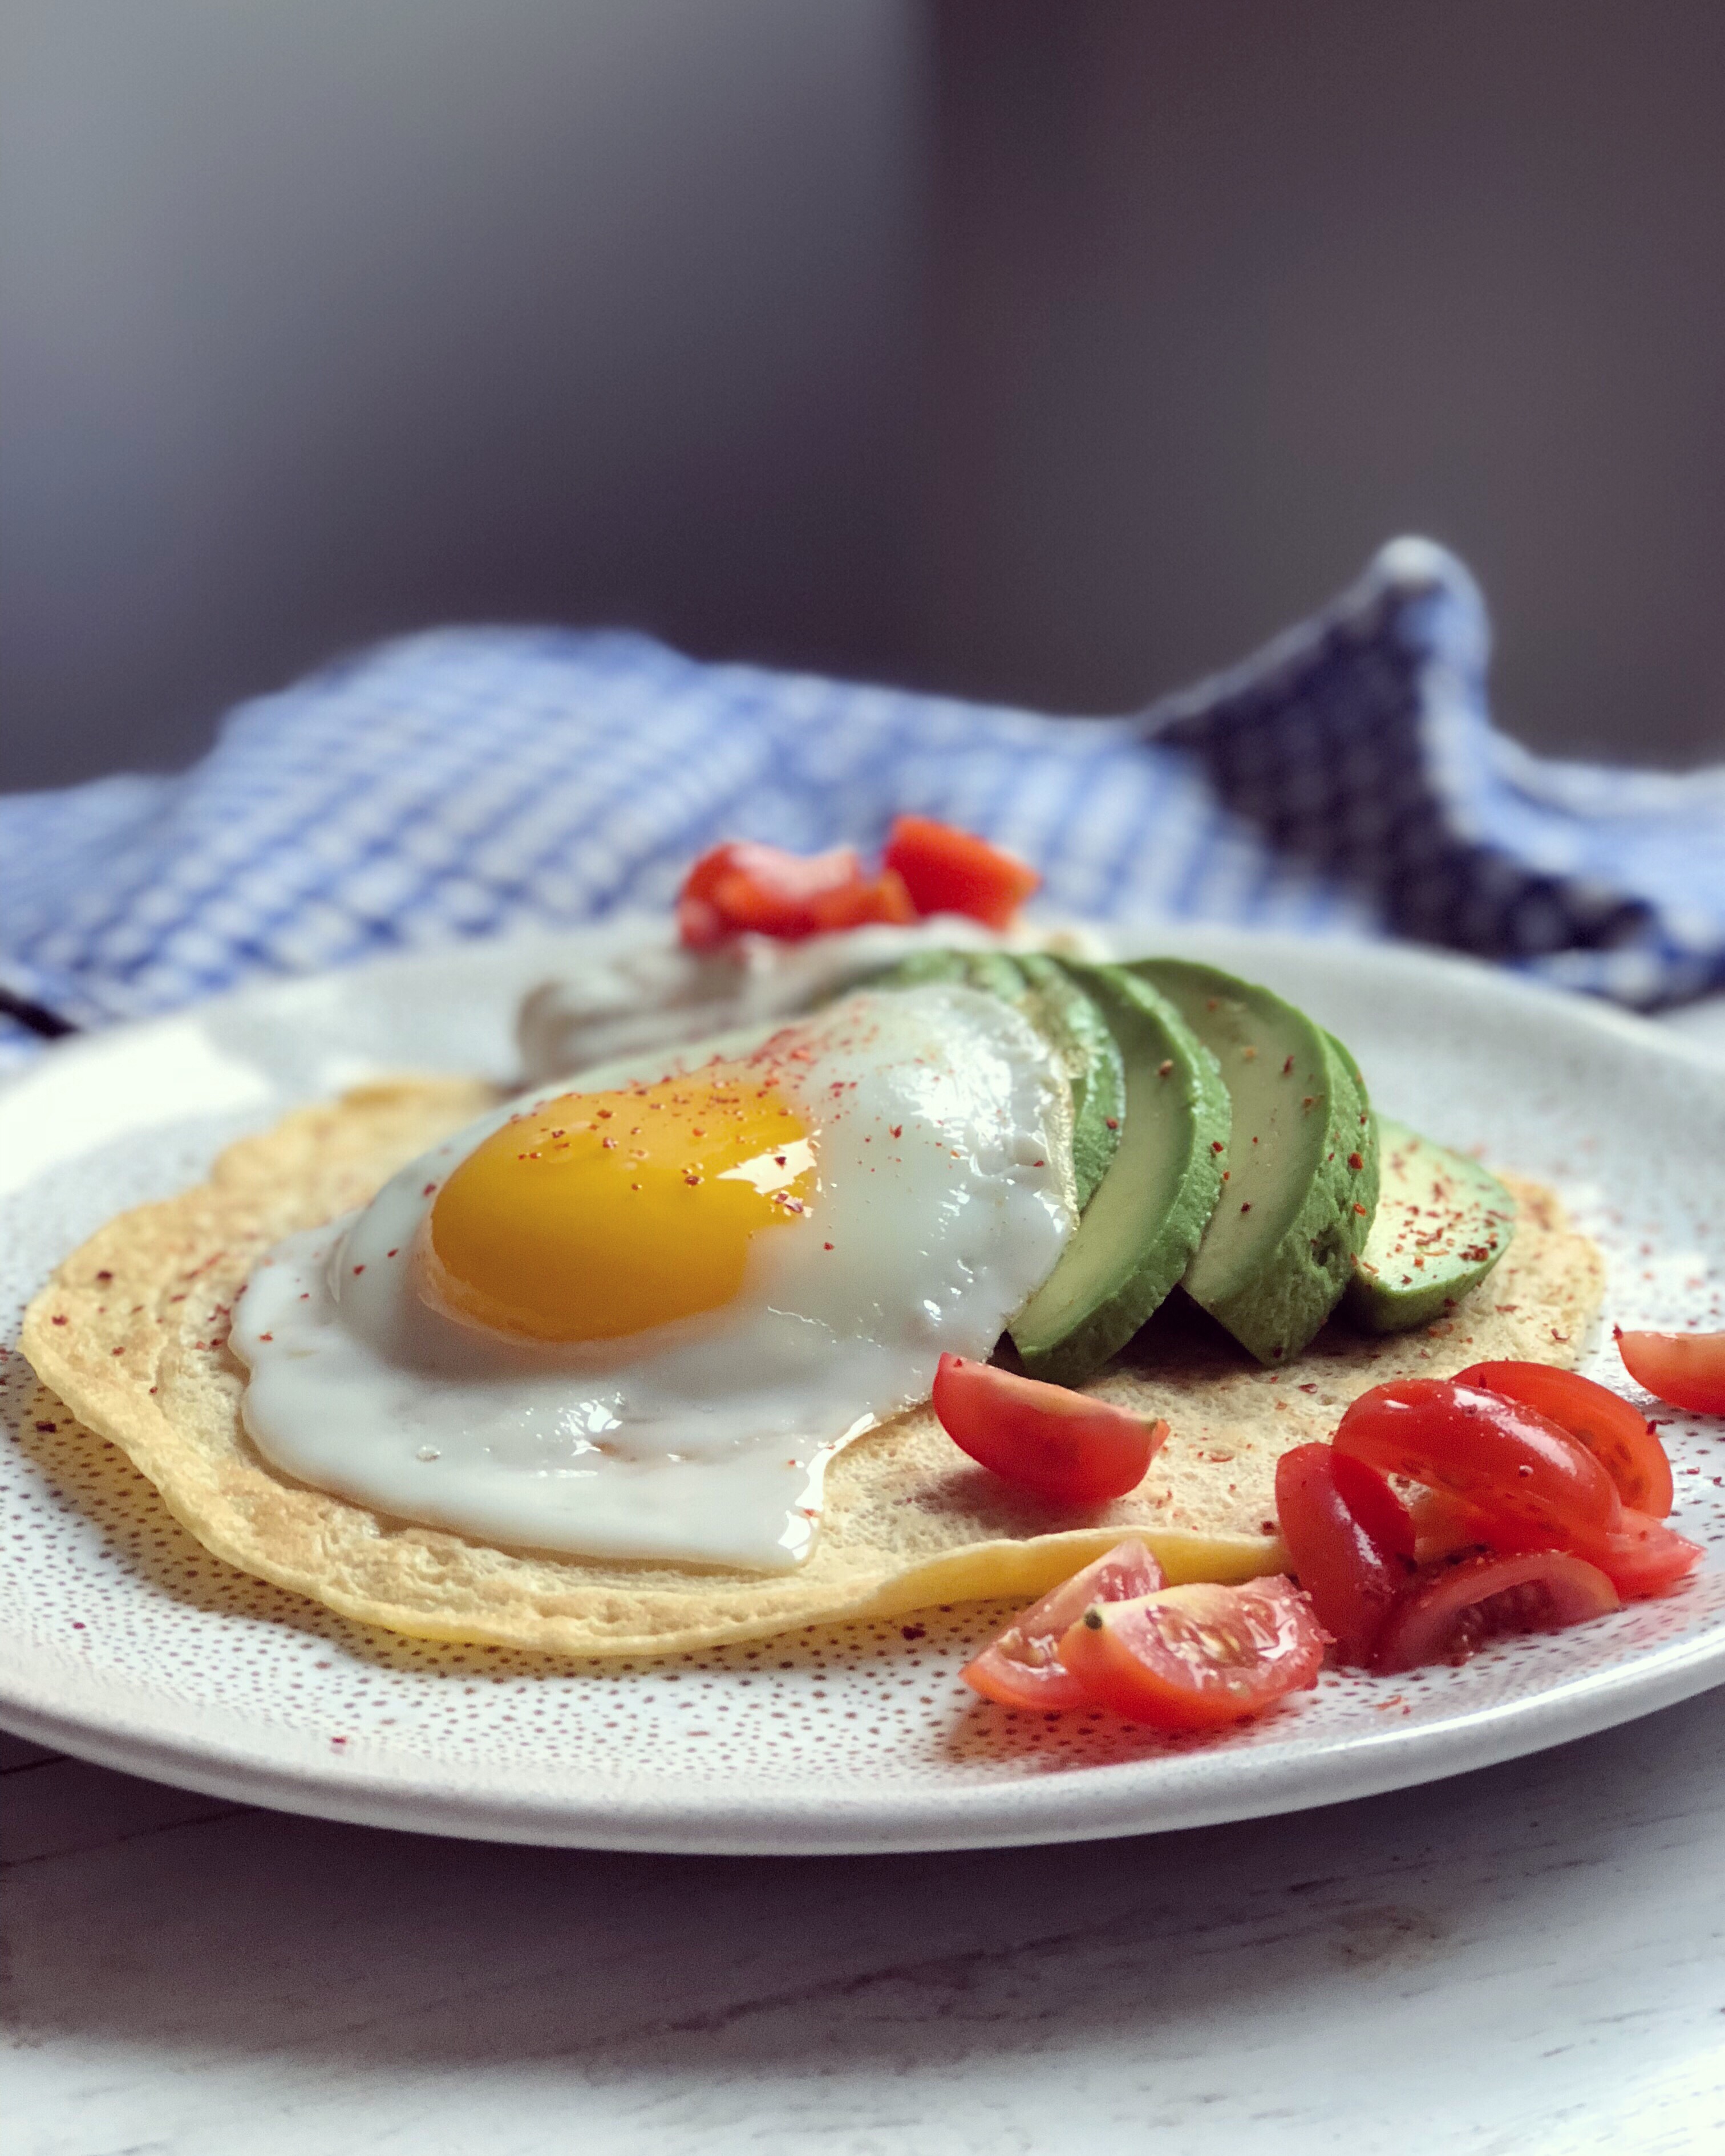 How to Make a Sunny-Side Up Egg • Pancake Recipes